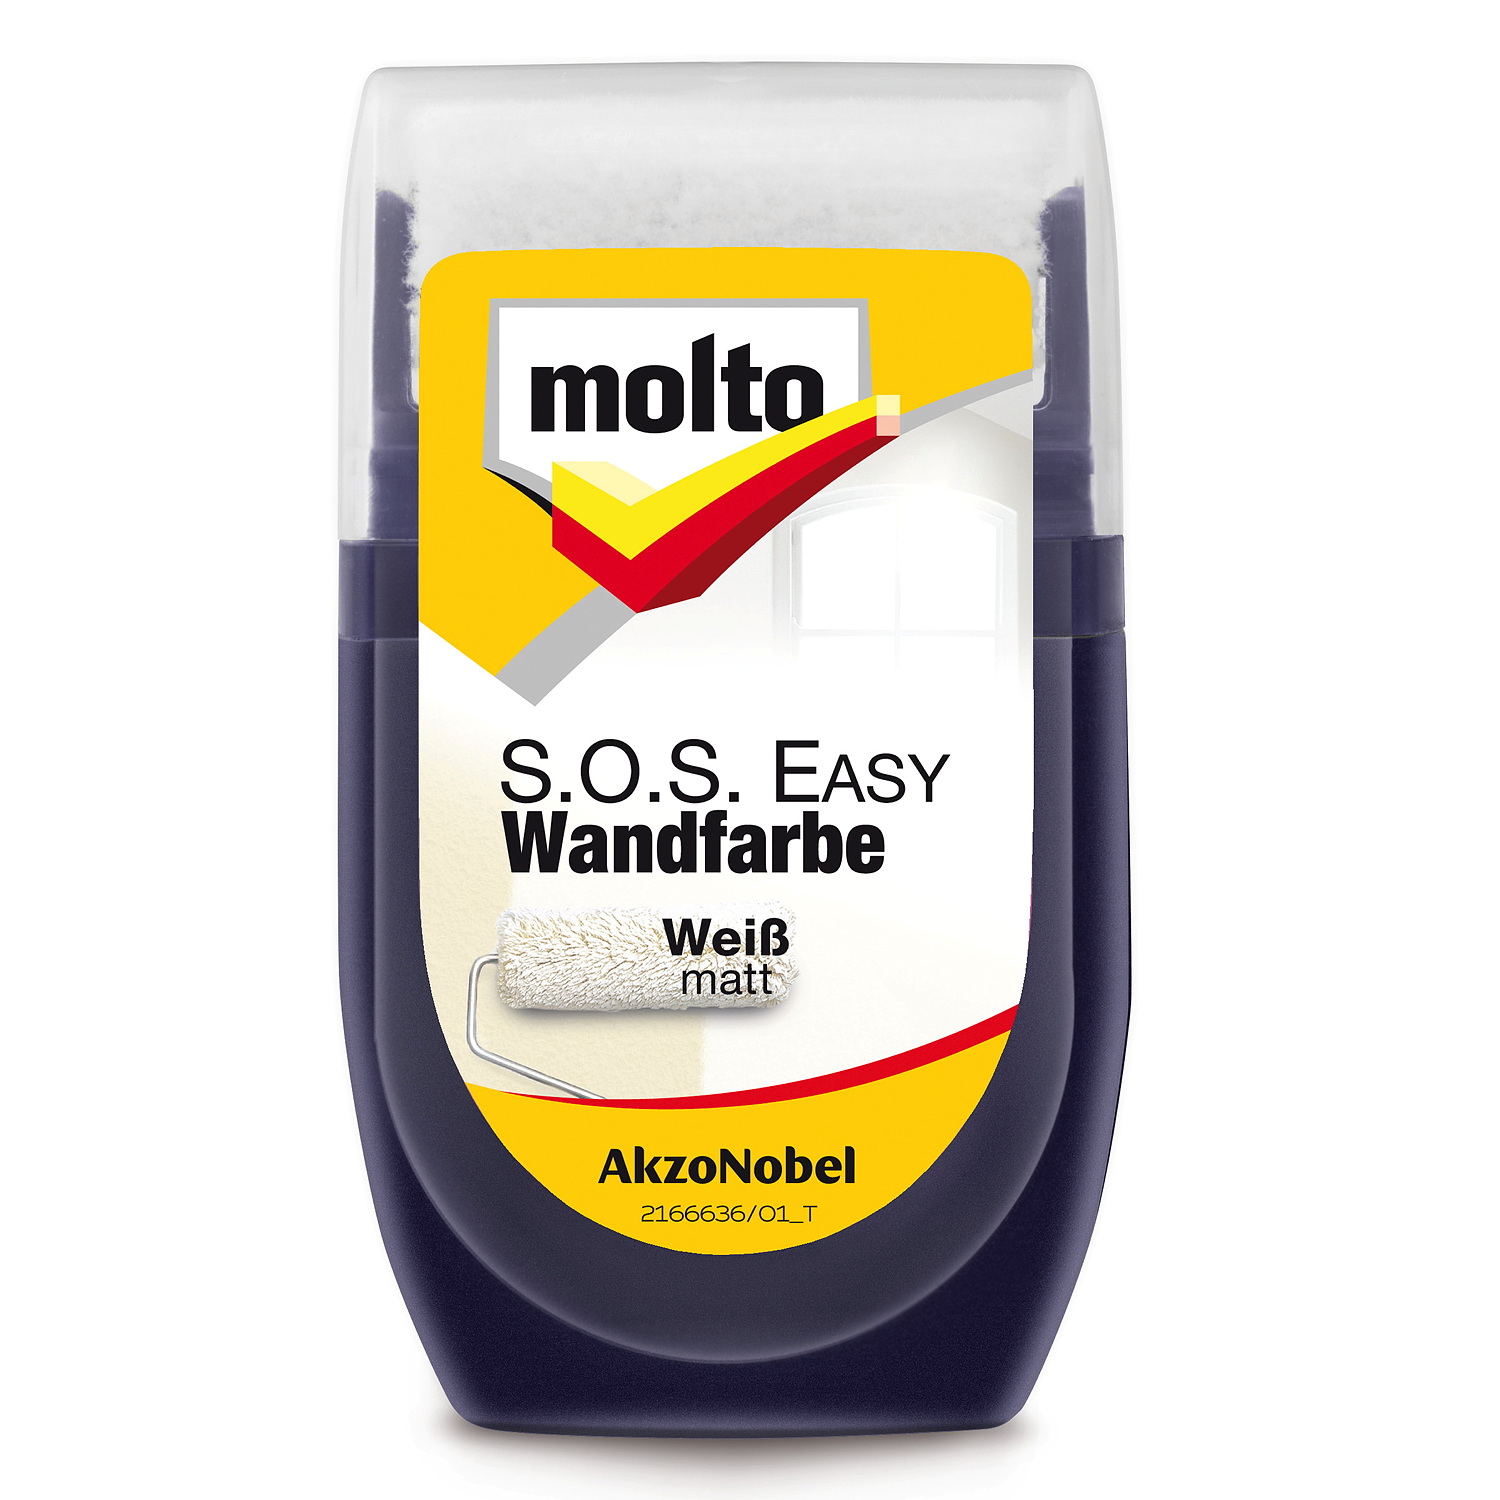 Molto S.O.S. Easy Wandfarbe 30 ml